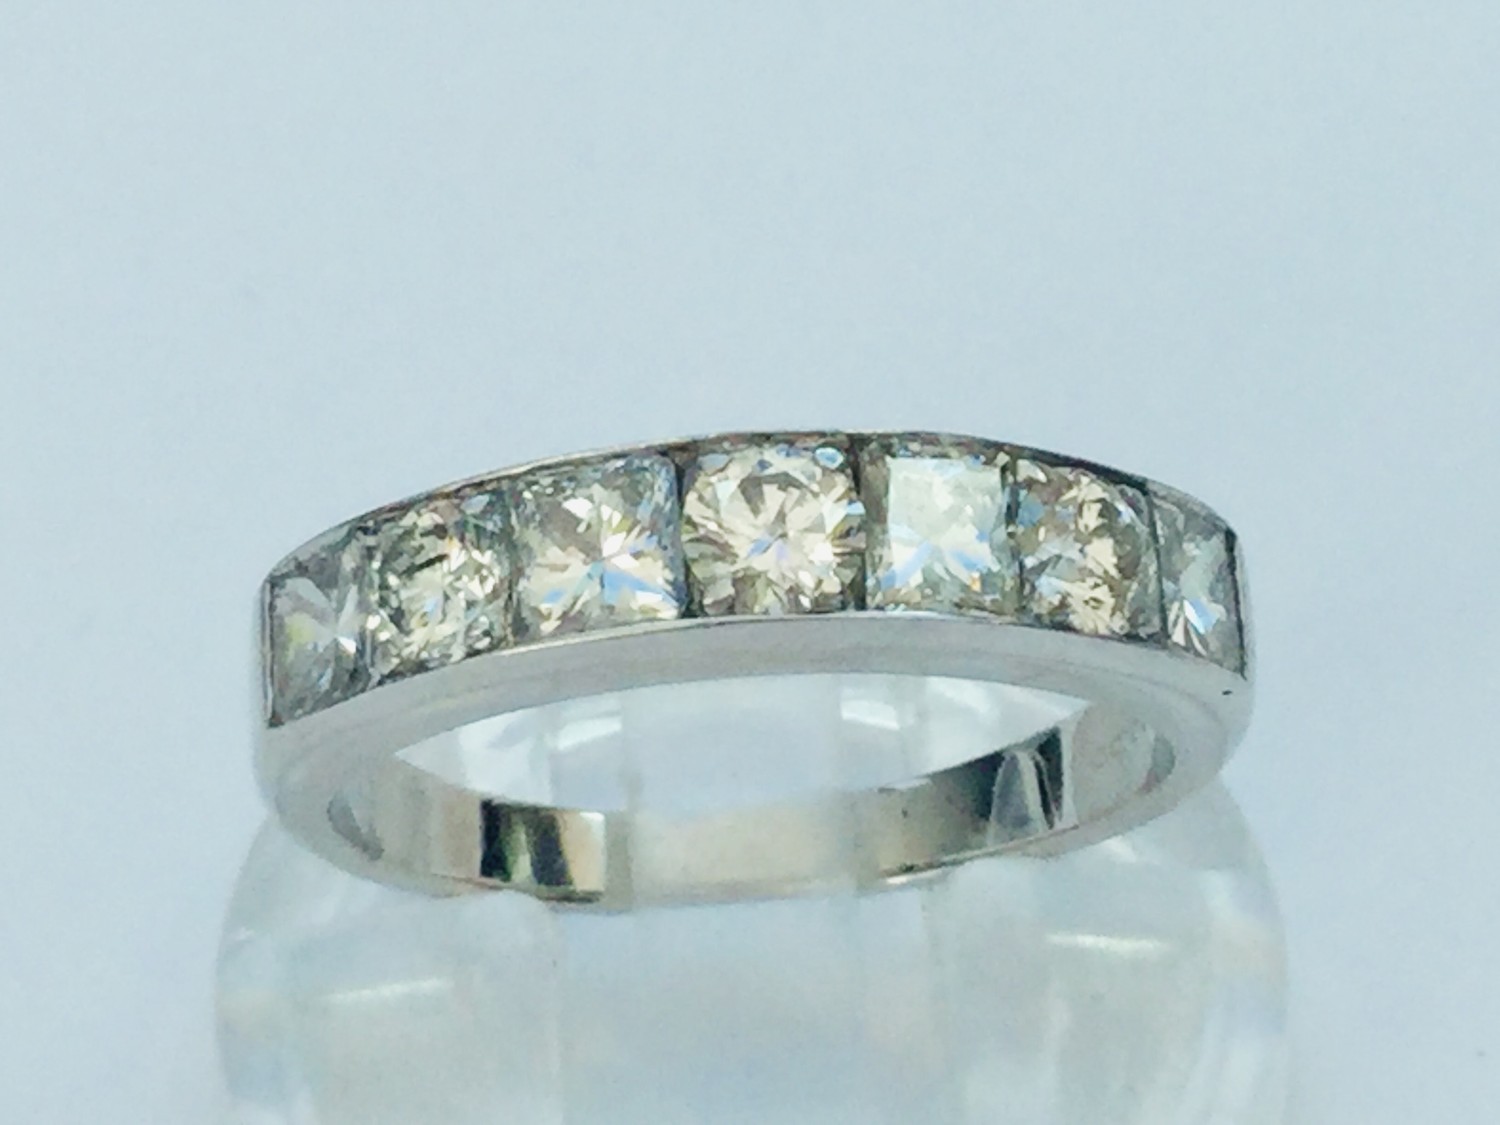 A ladies 18ct white gold diamond ring, set with four princess cut diamonds and three round brilliant